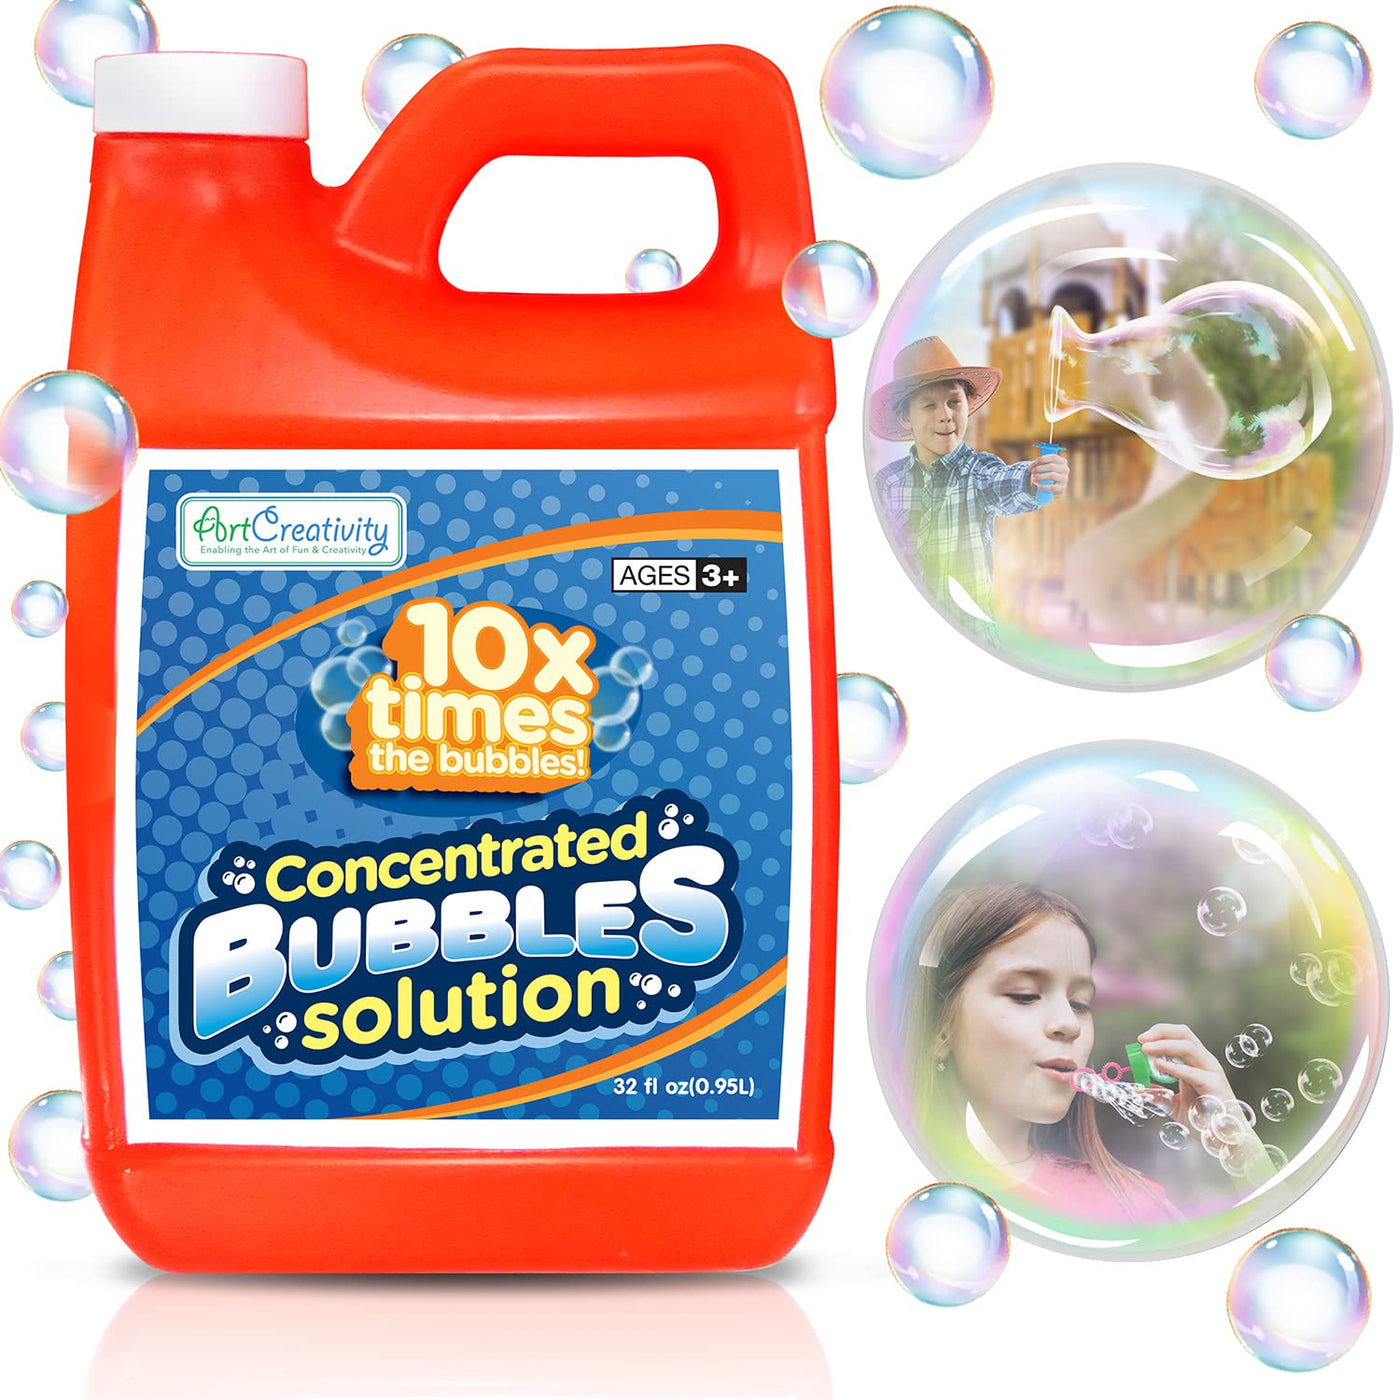 ArtCreativity 32oz Bubble Solution Refills (Up to 2.5 Gallon) Big Bubble Concentrated Solution, Bubbles for Kids, Party Bubble Machine, Bubble Juice Refills